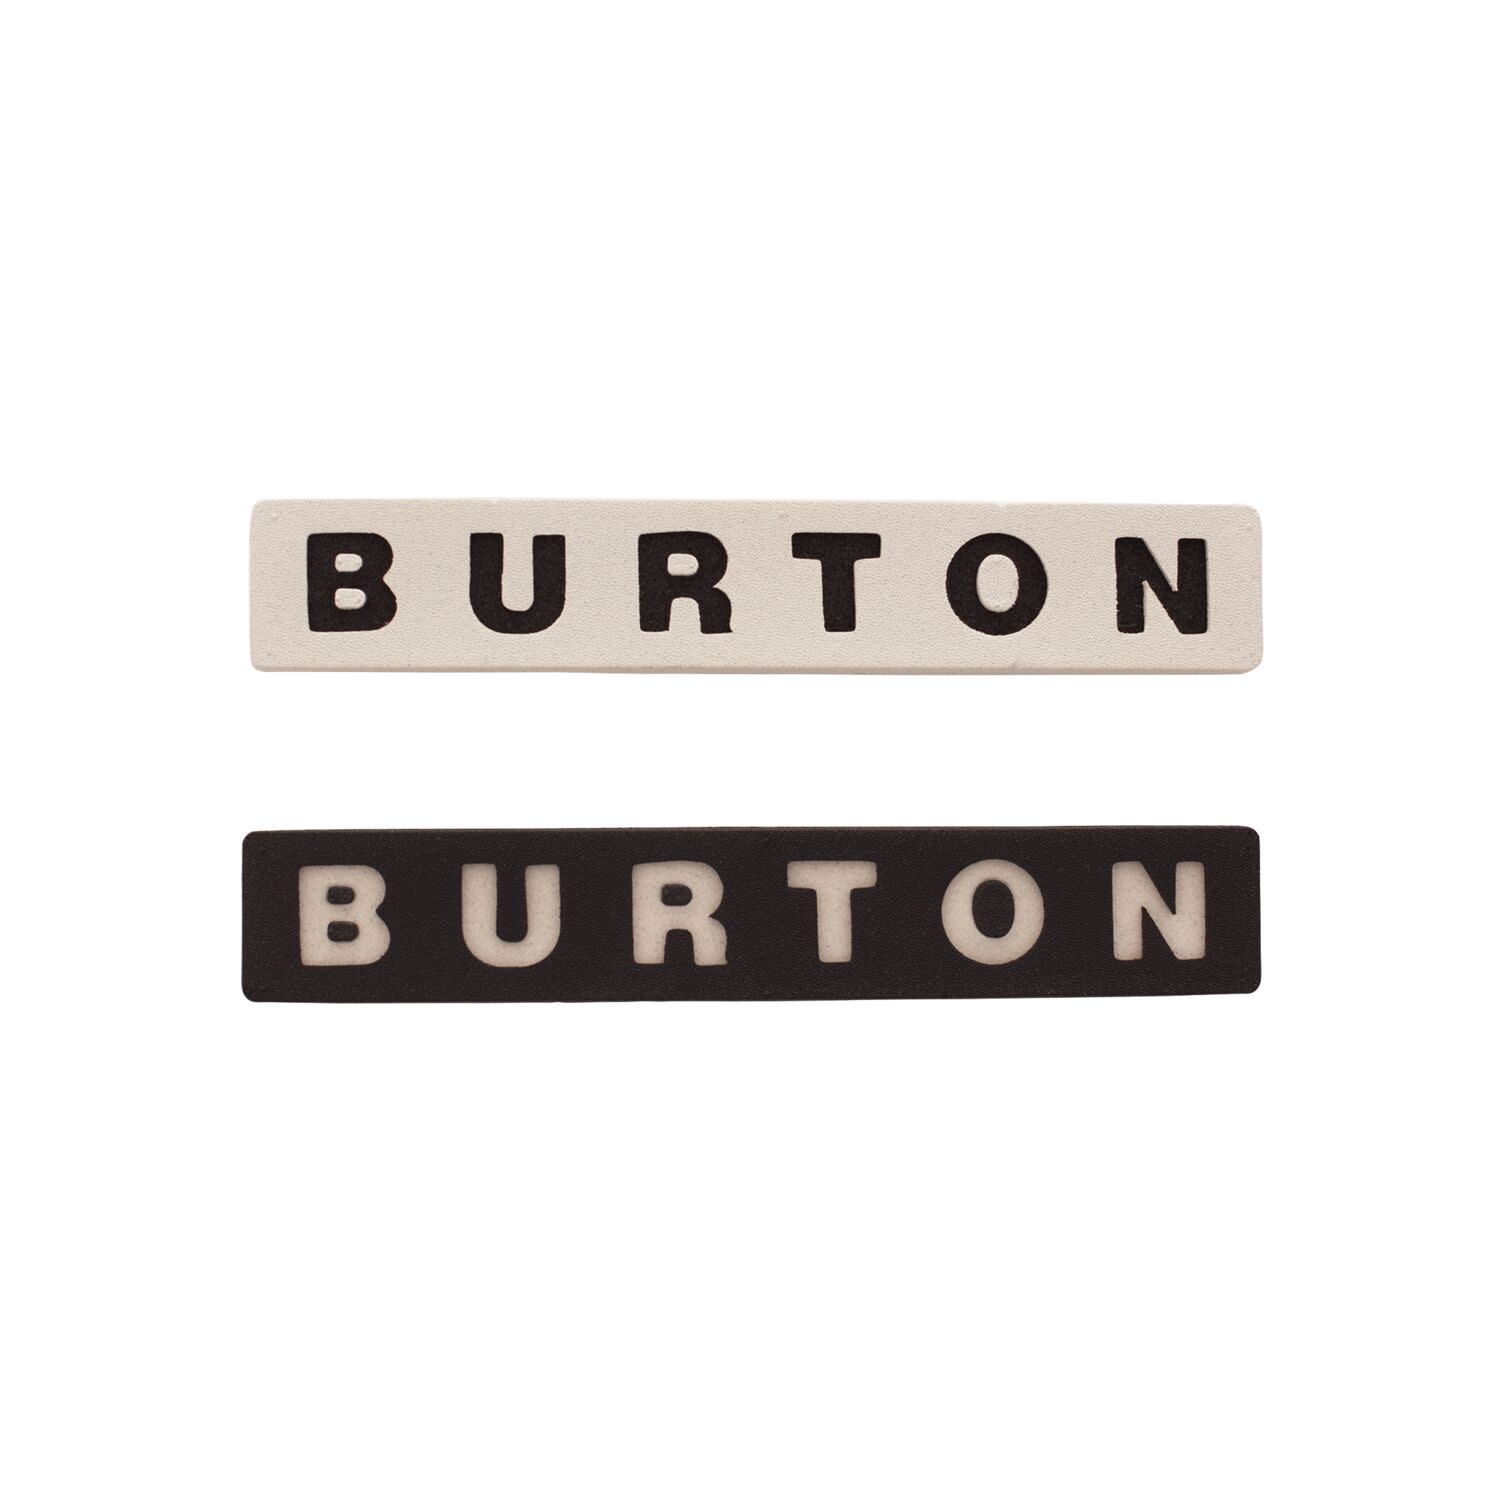 Burton Foam Mats 960